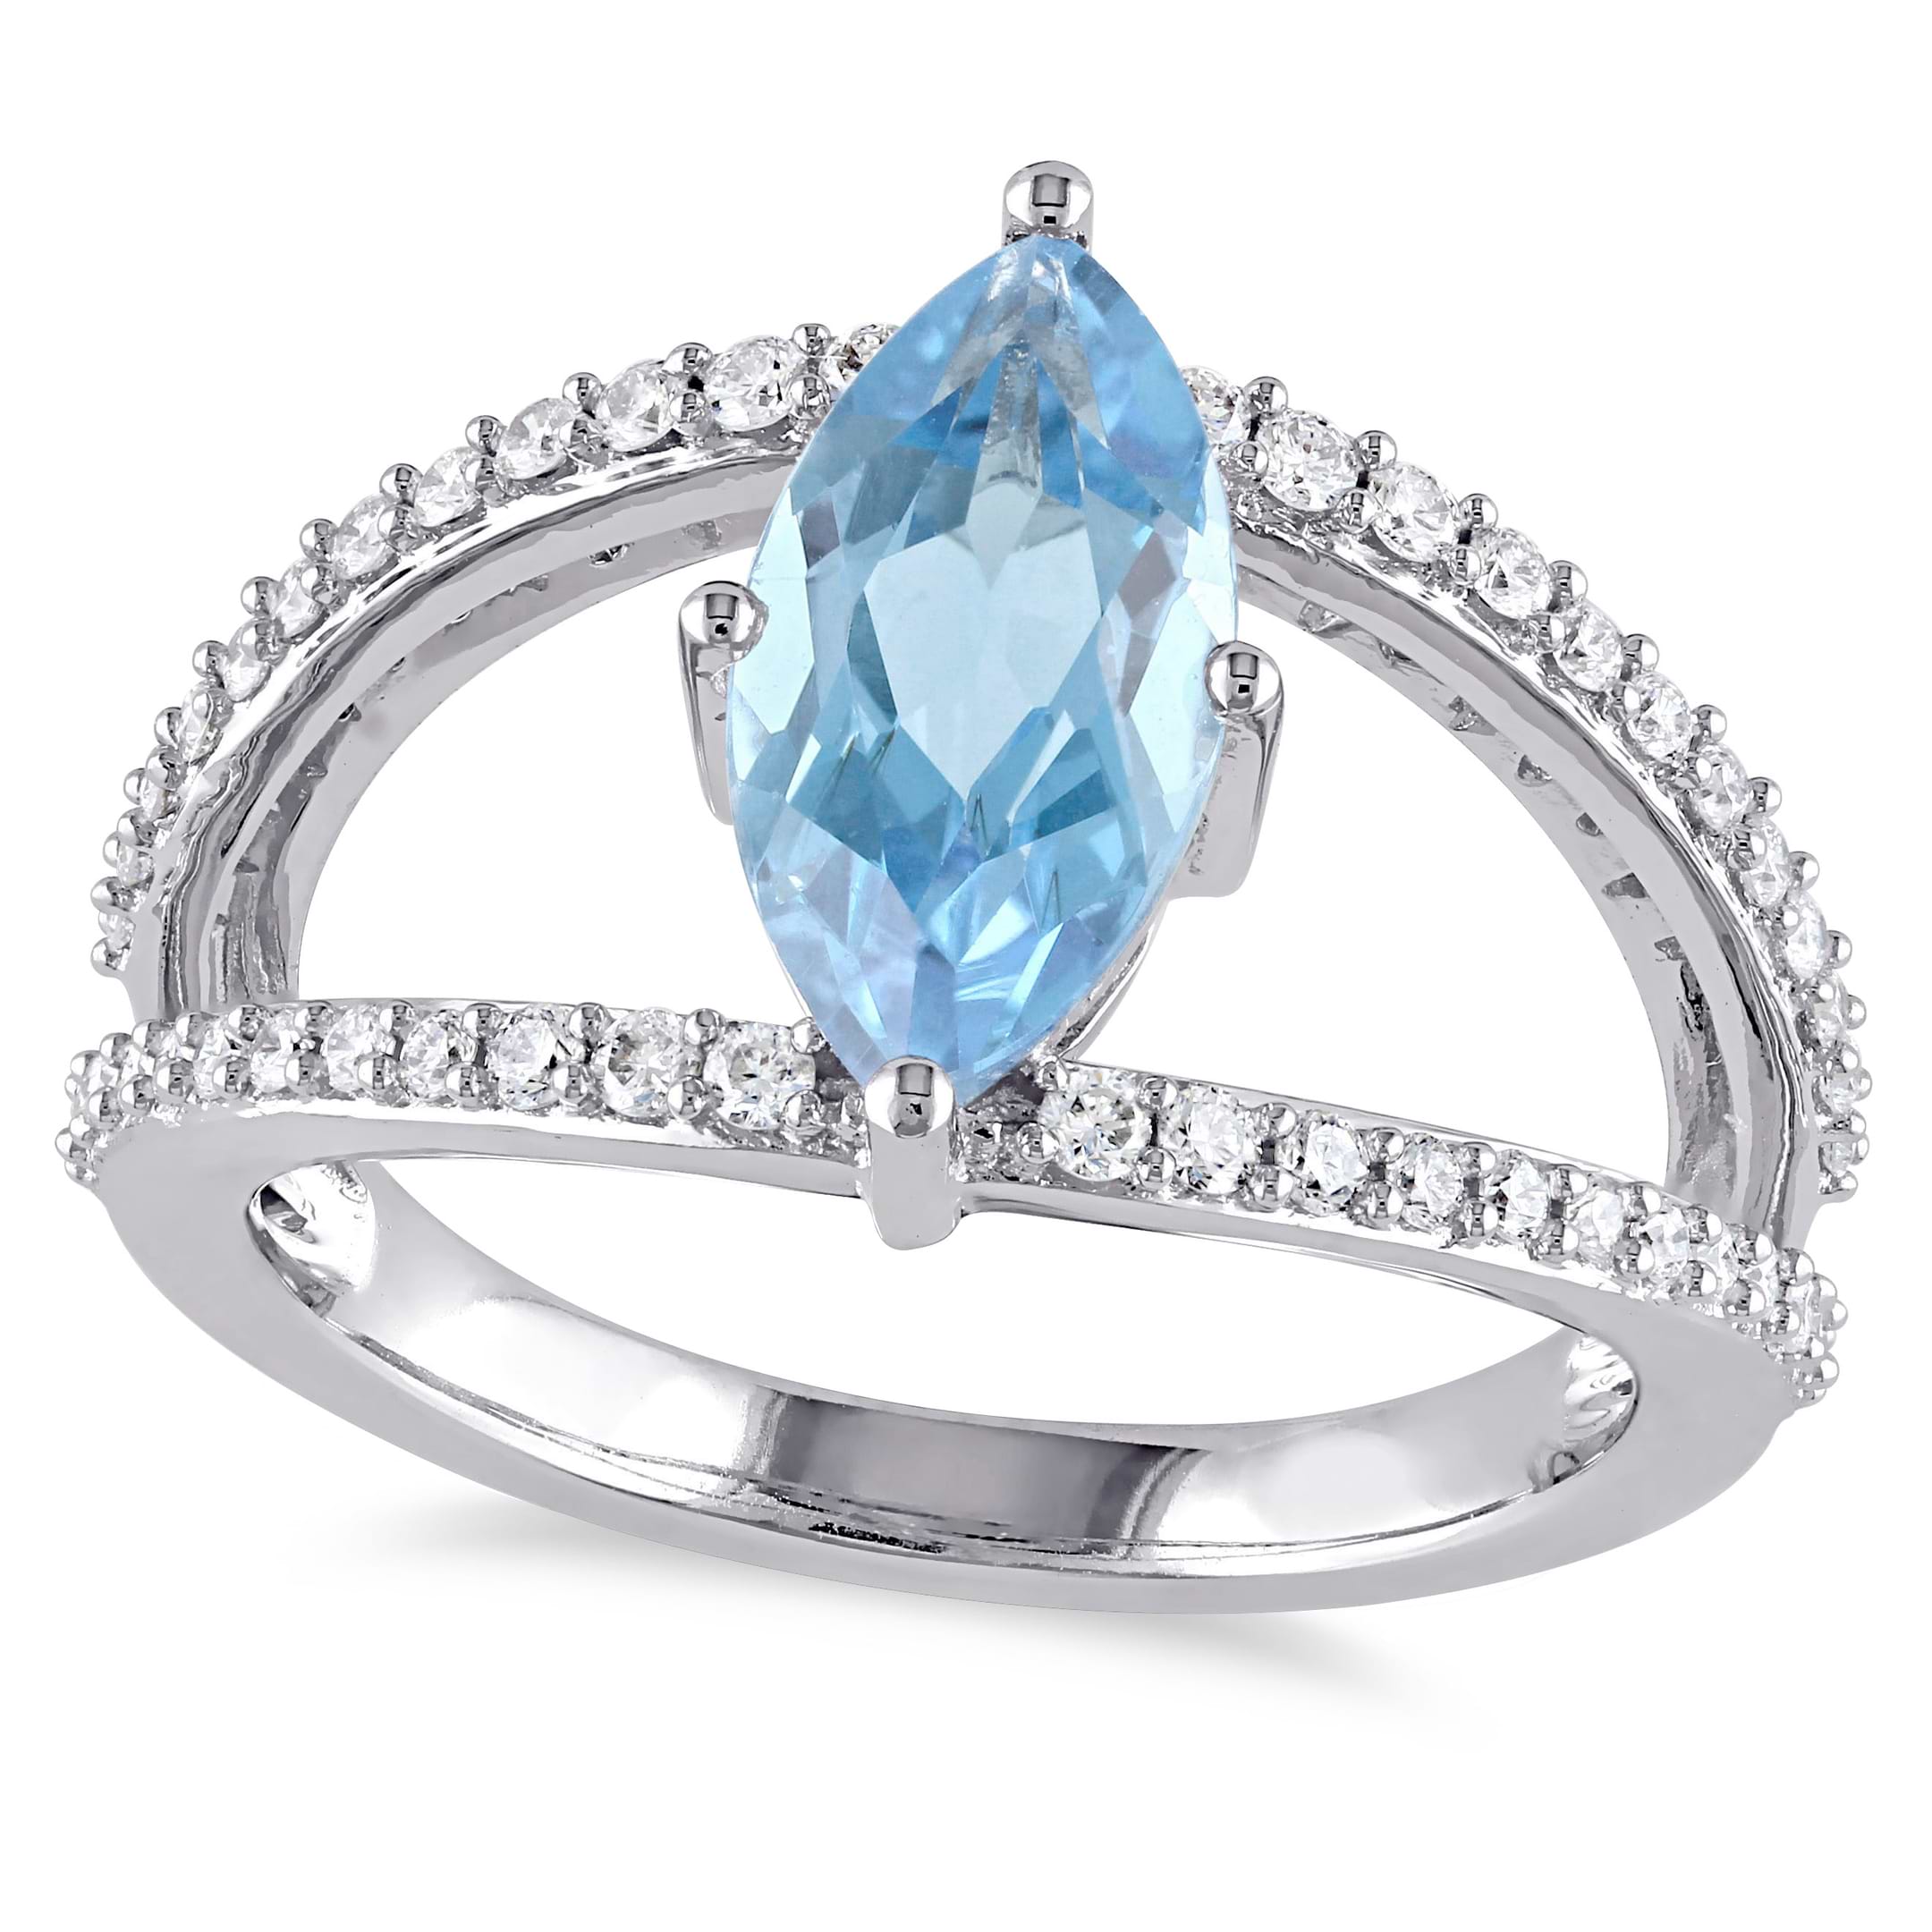 Marquise Blue Topaz & Diamond Fashion Ring 14K White Gold (2.30ct)